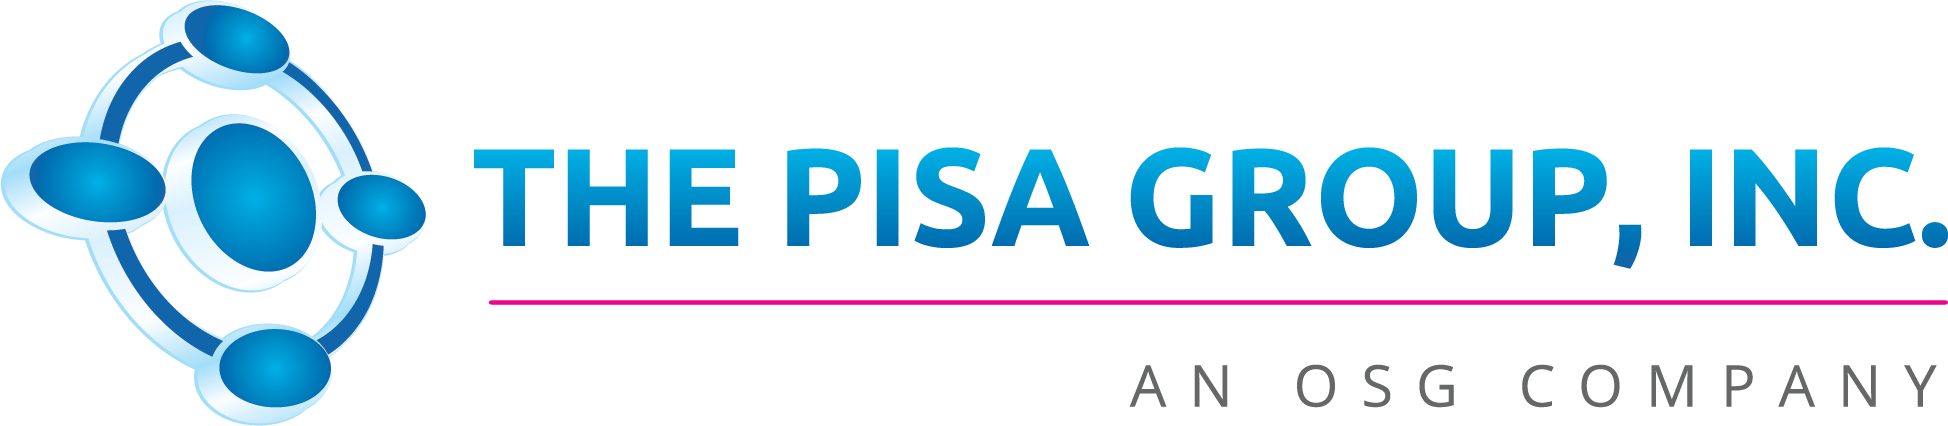 The Pisa Group Inc Company Logo